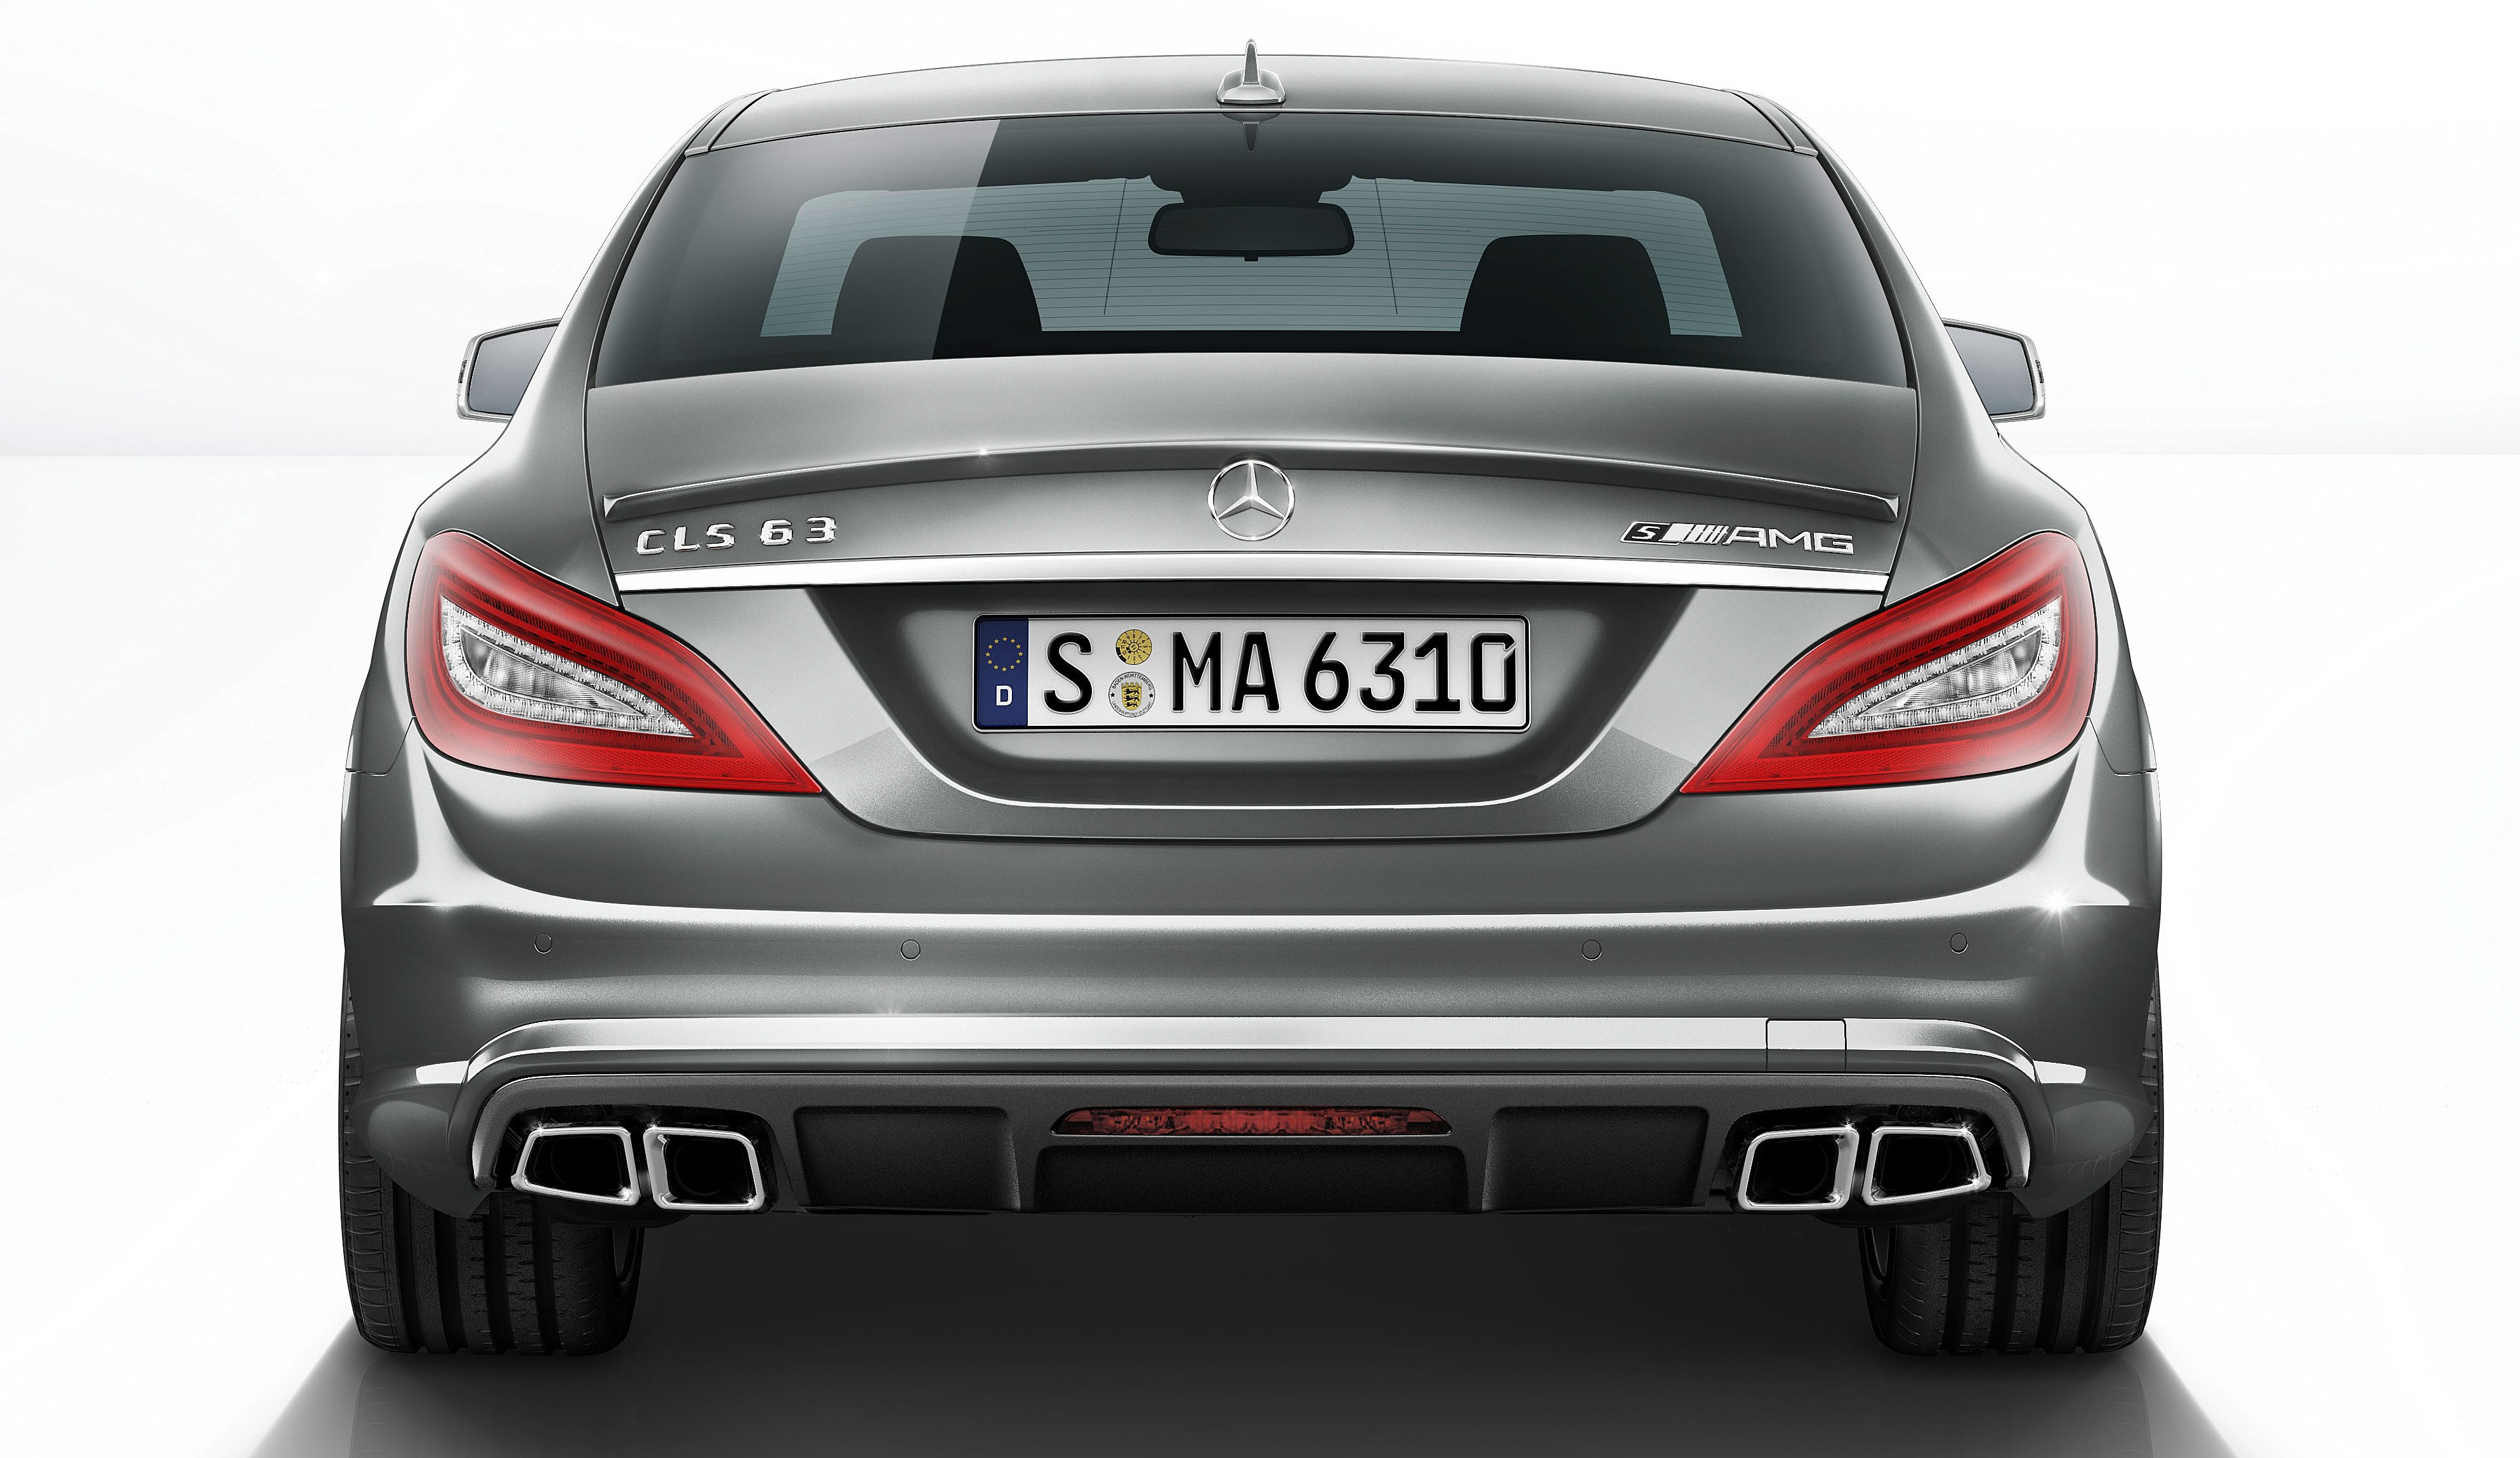 Mercedes CLS-Class (C257) exterior specifications